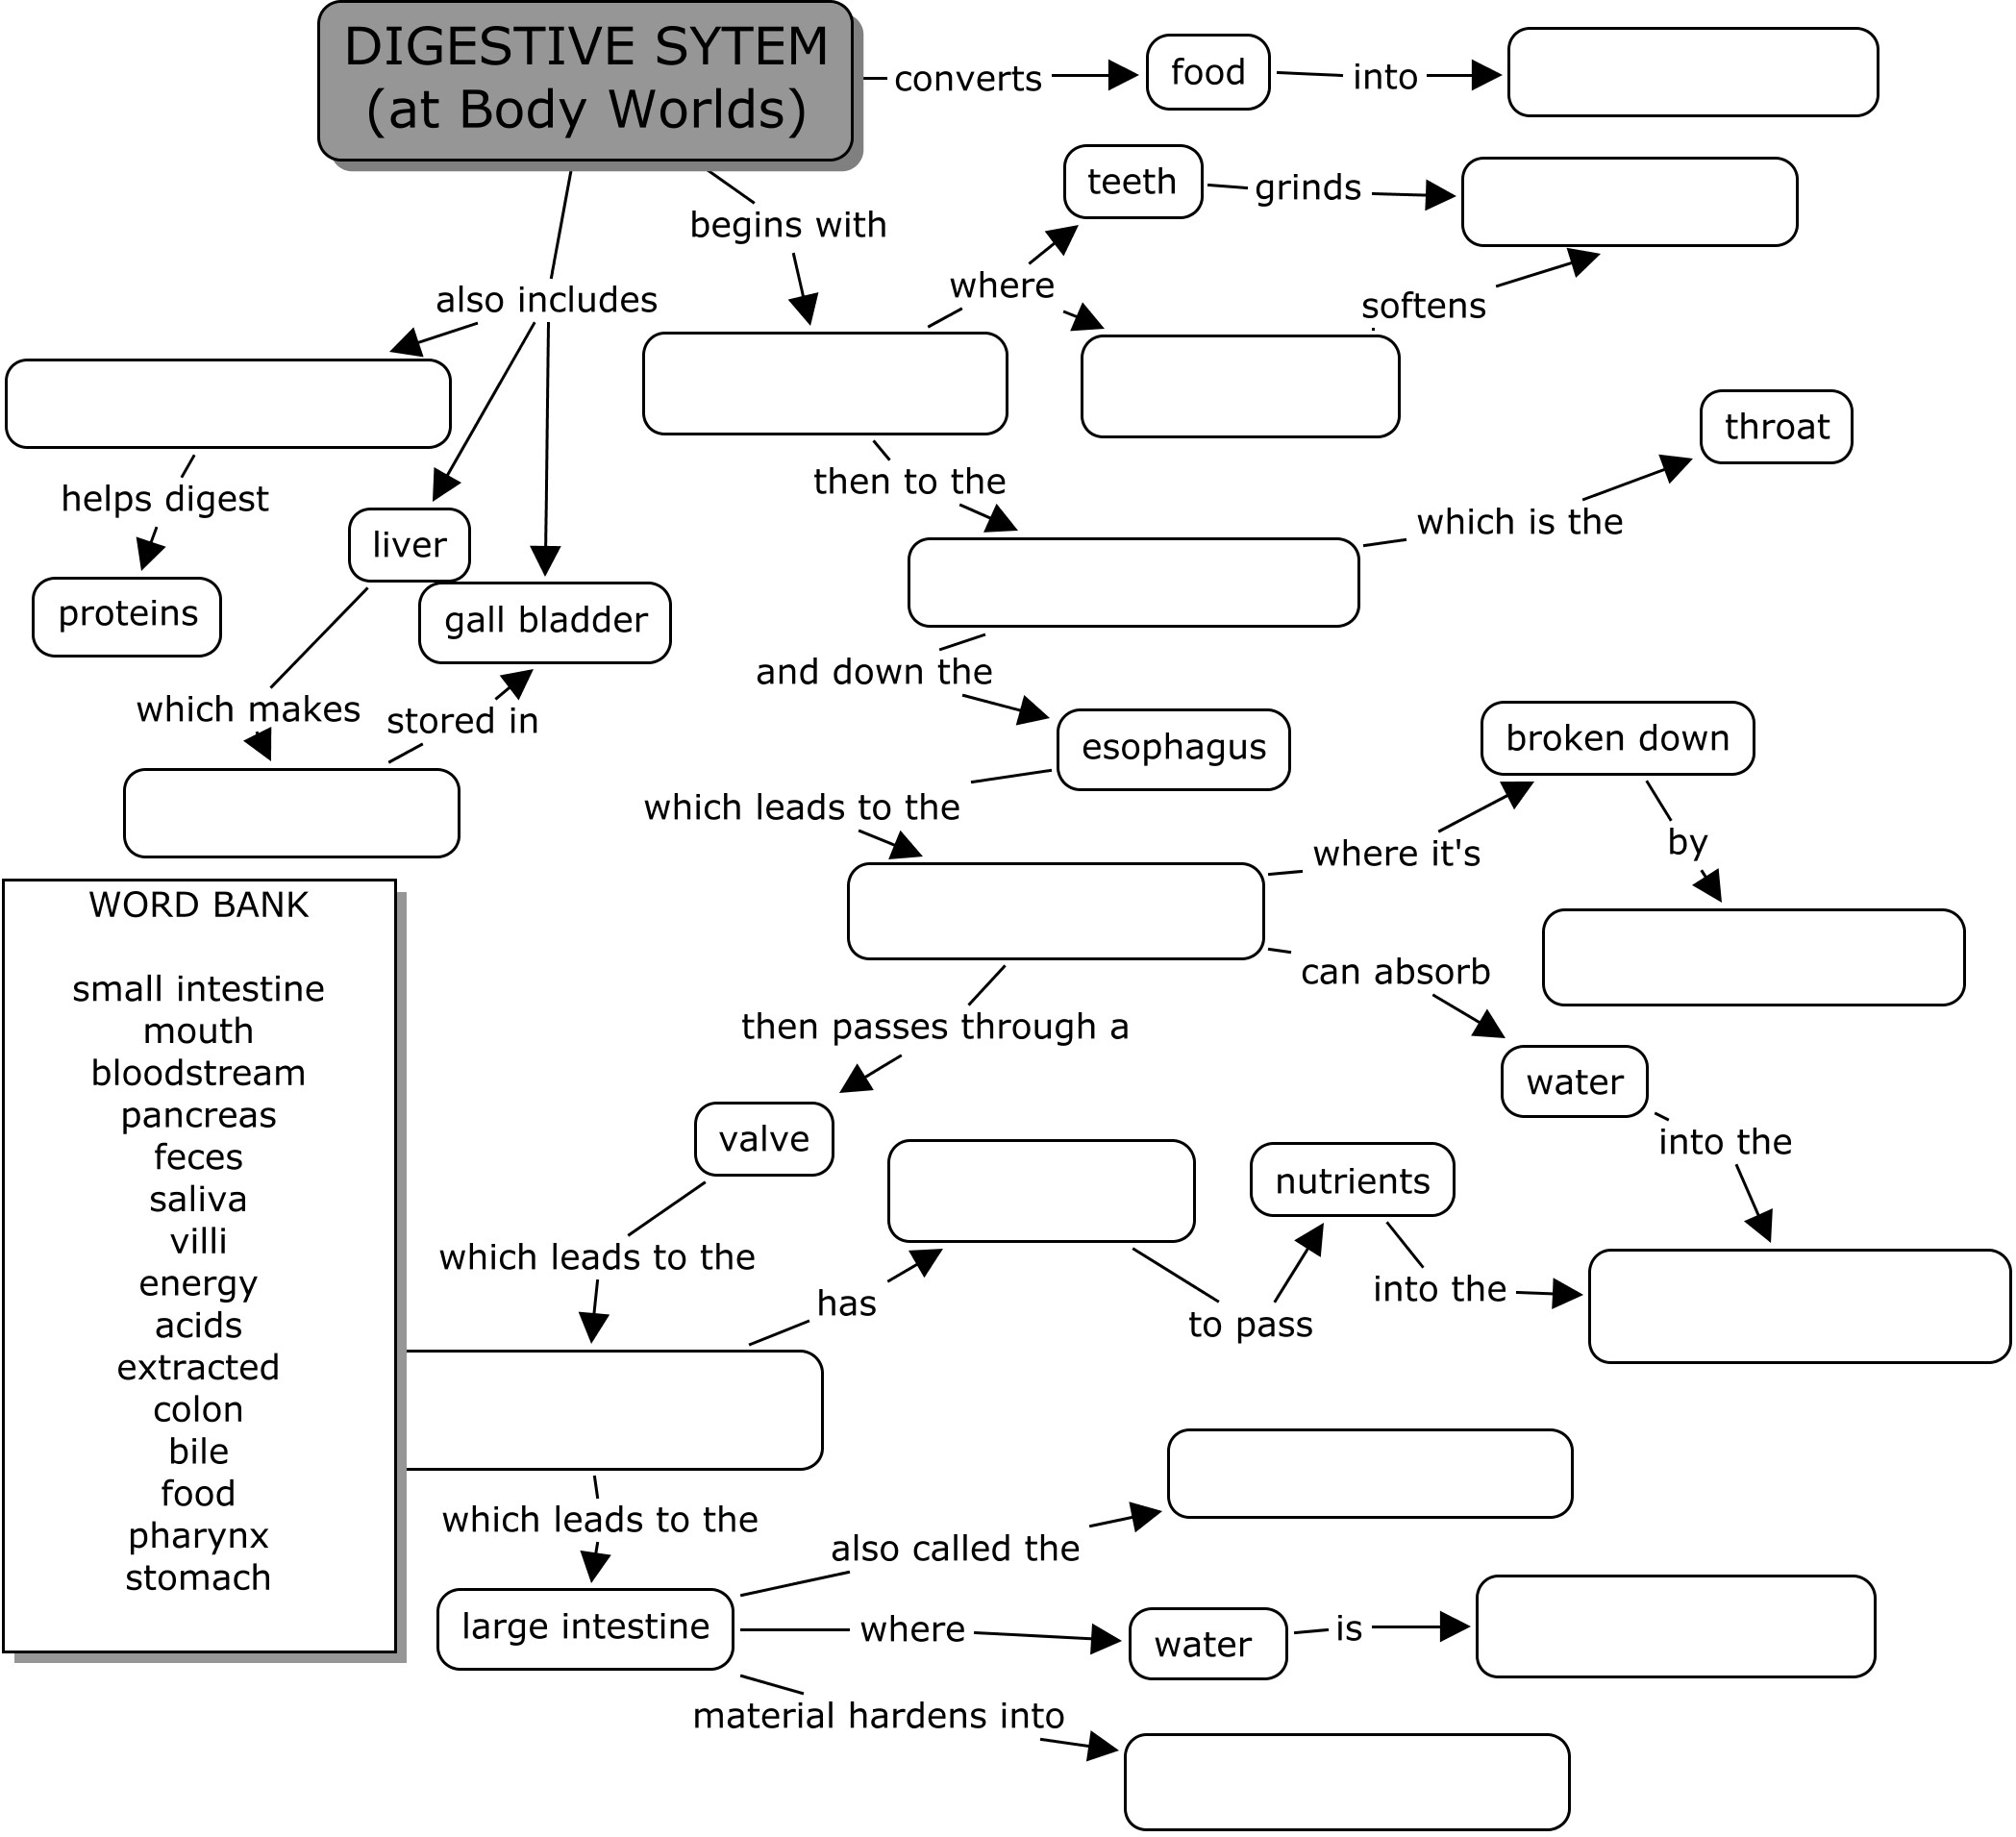 Digestive System Worksheet Answers Image